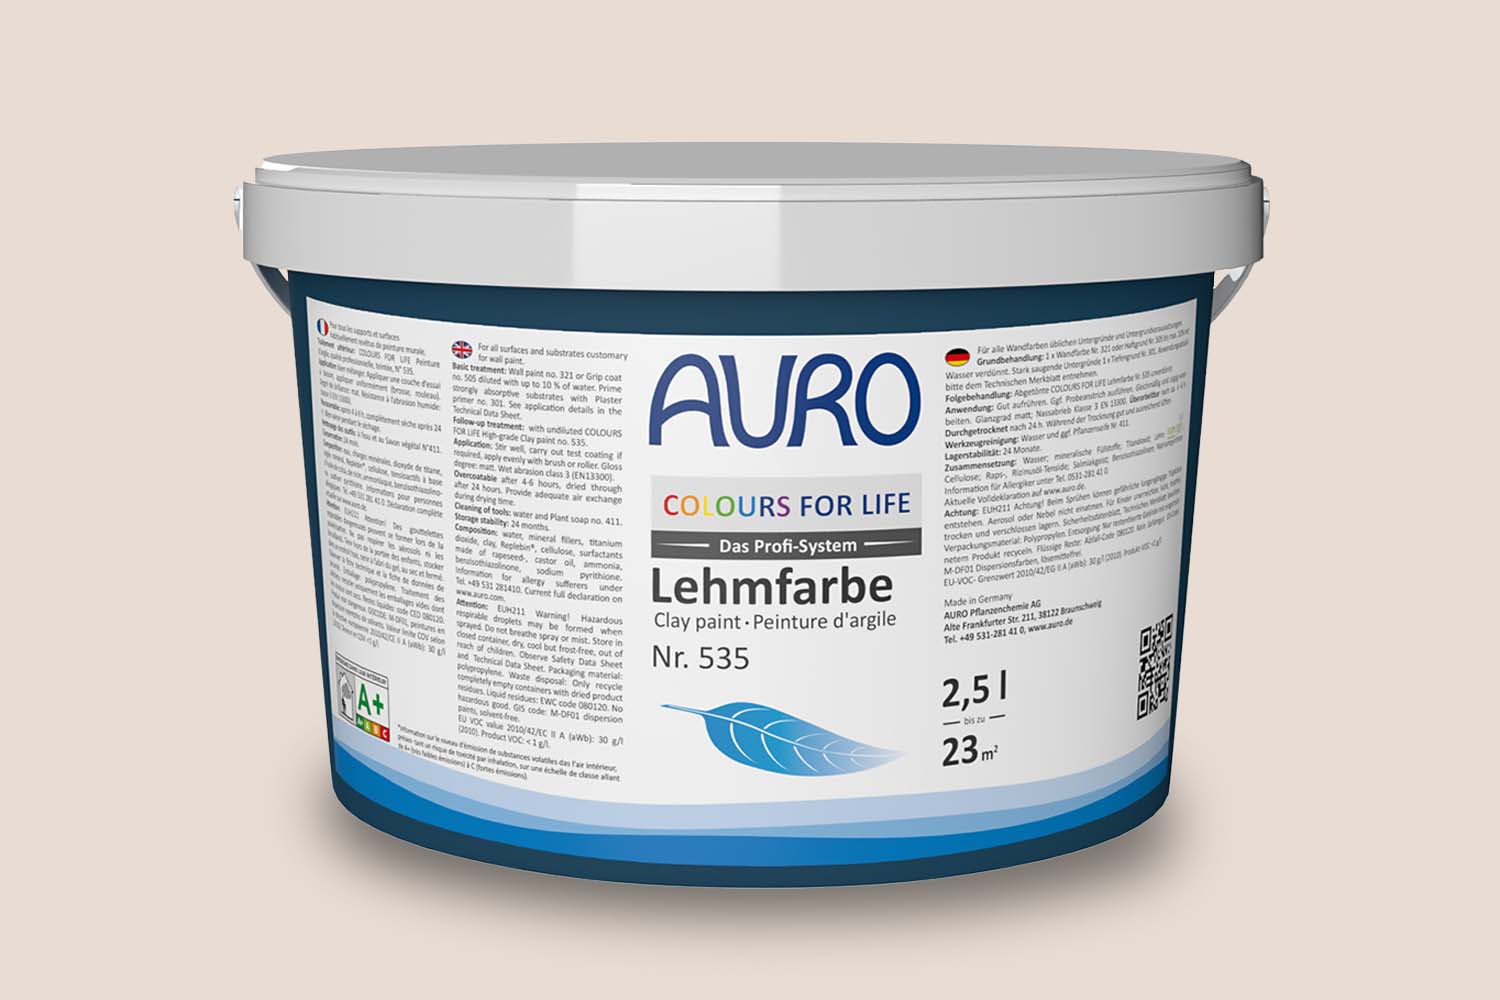 Auro Profi-Lehmfarbe Nr. 535 water chestnut Colours For Life